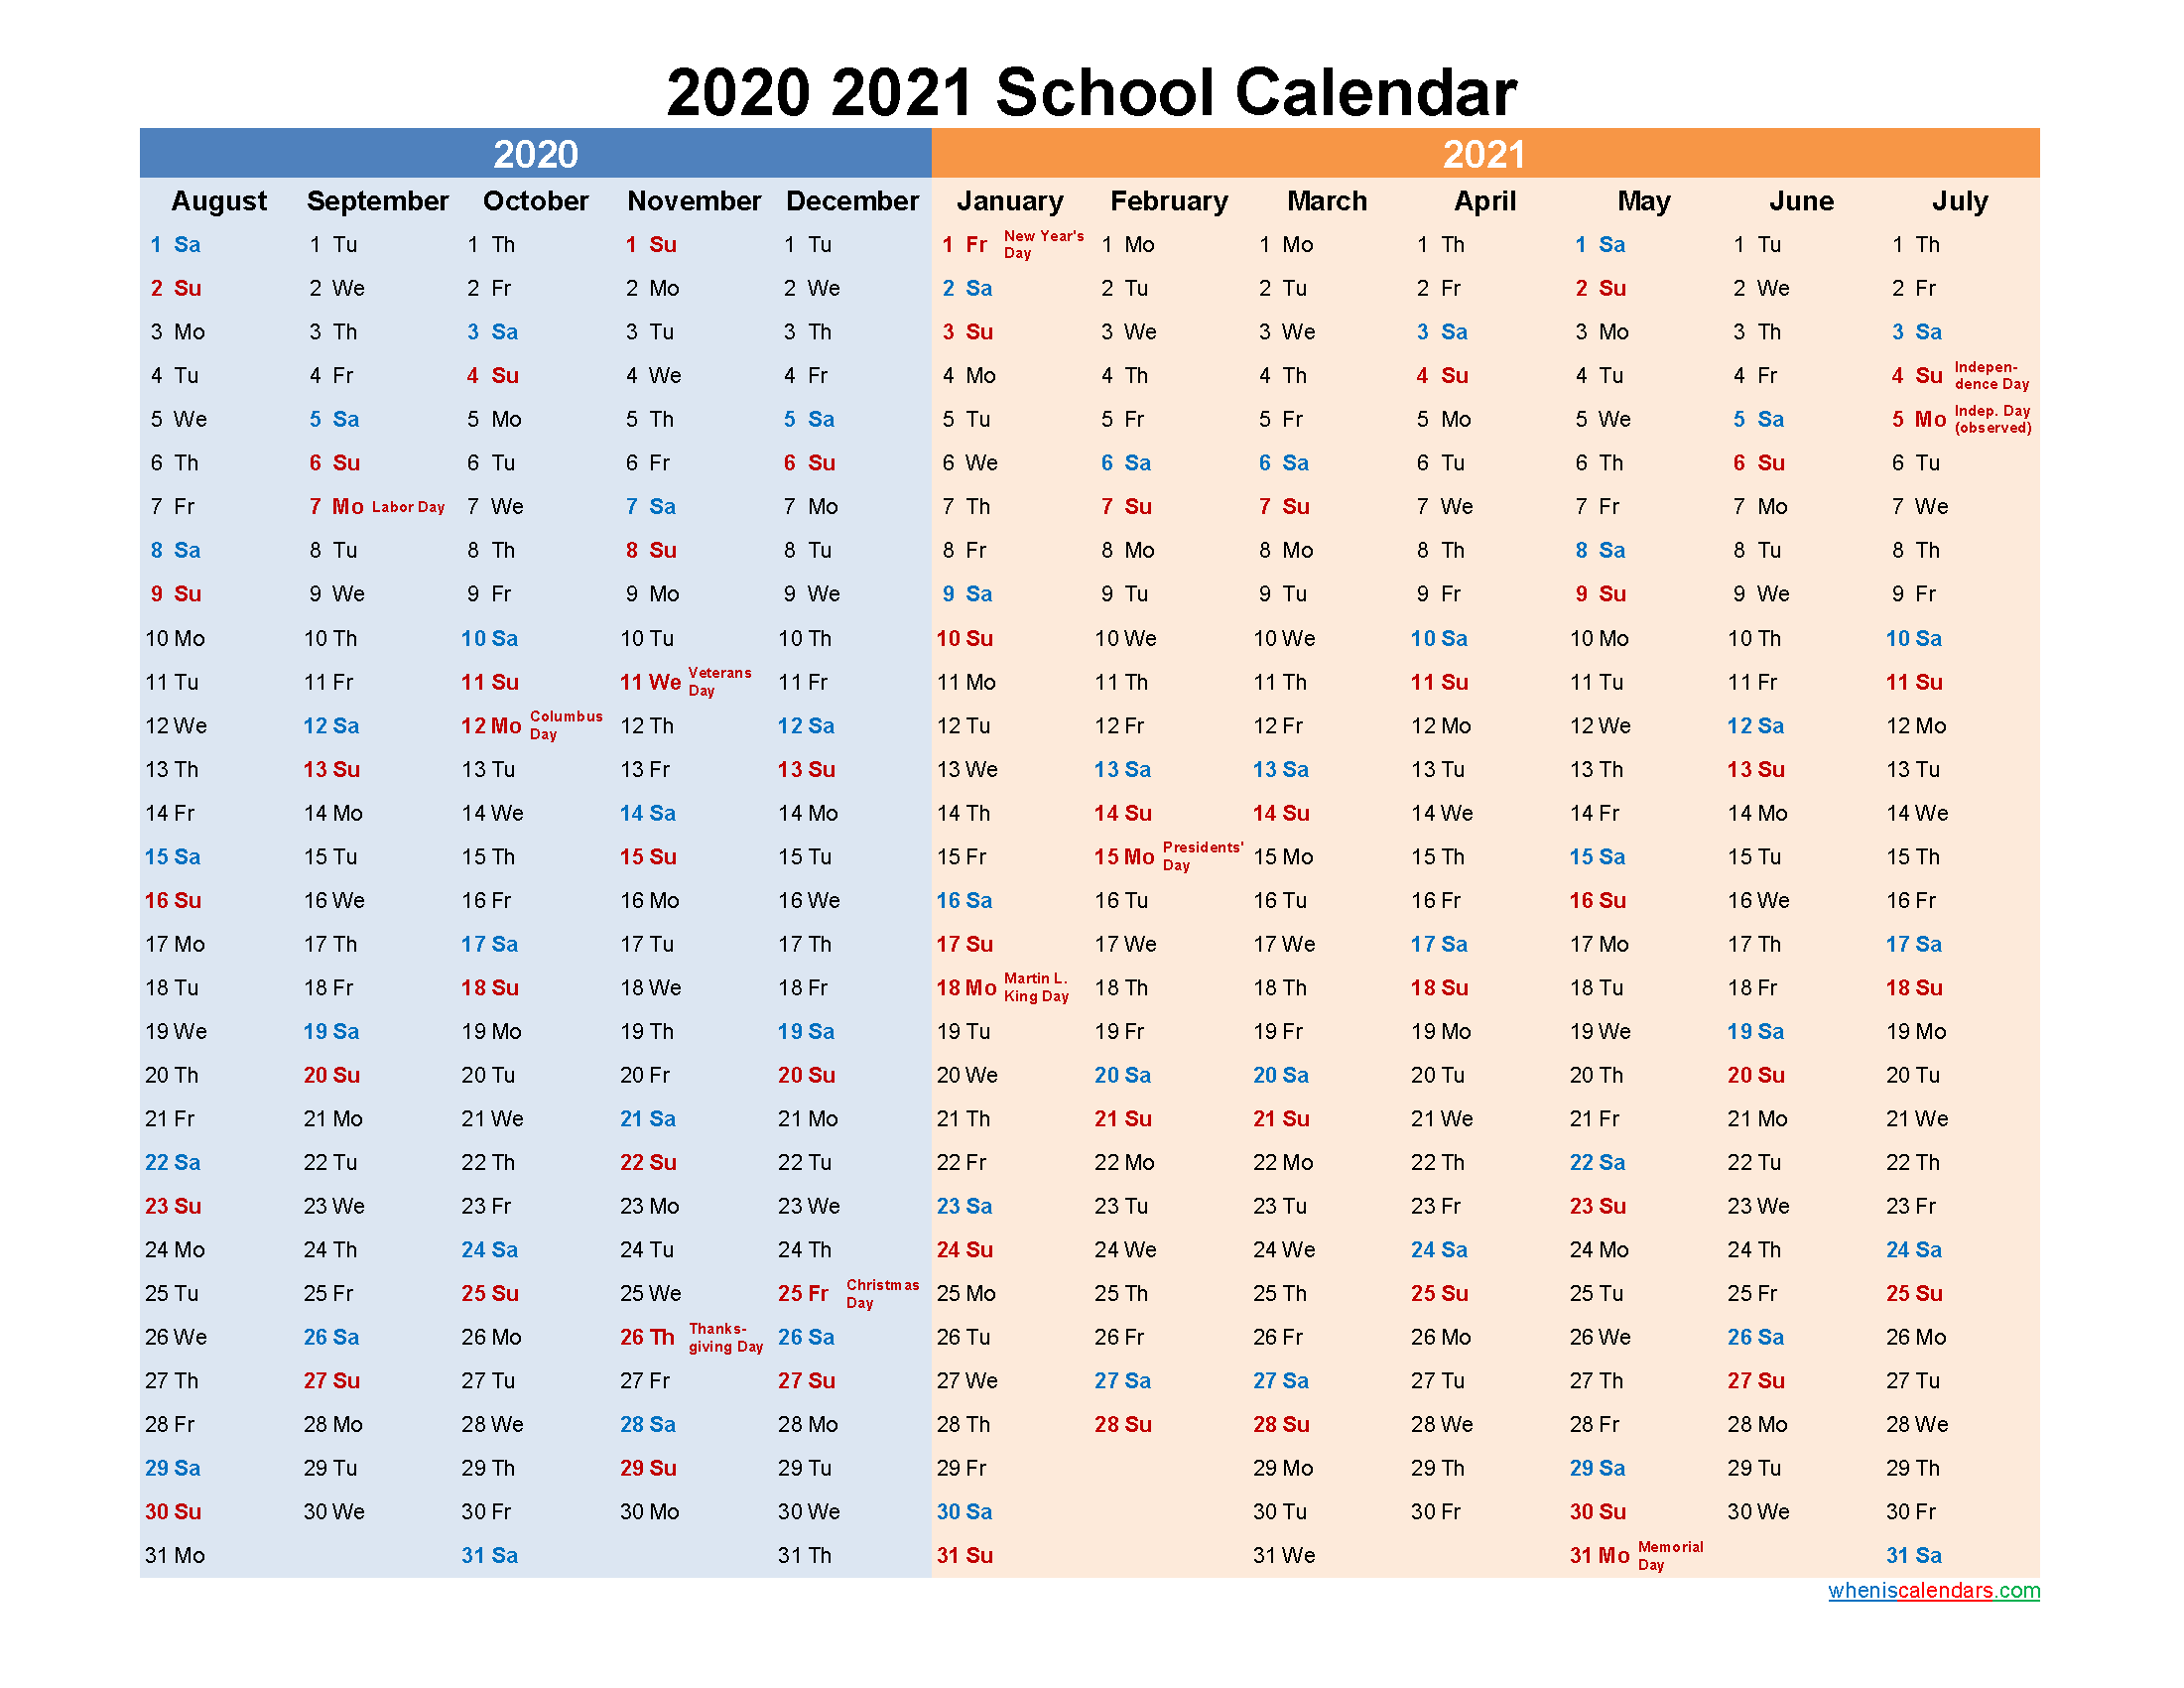 2020 and 2021 School Calendar Printable - Template No.21scl28